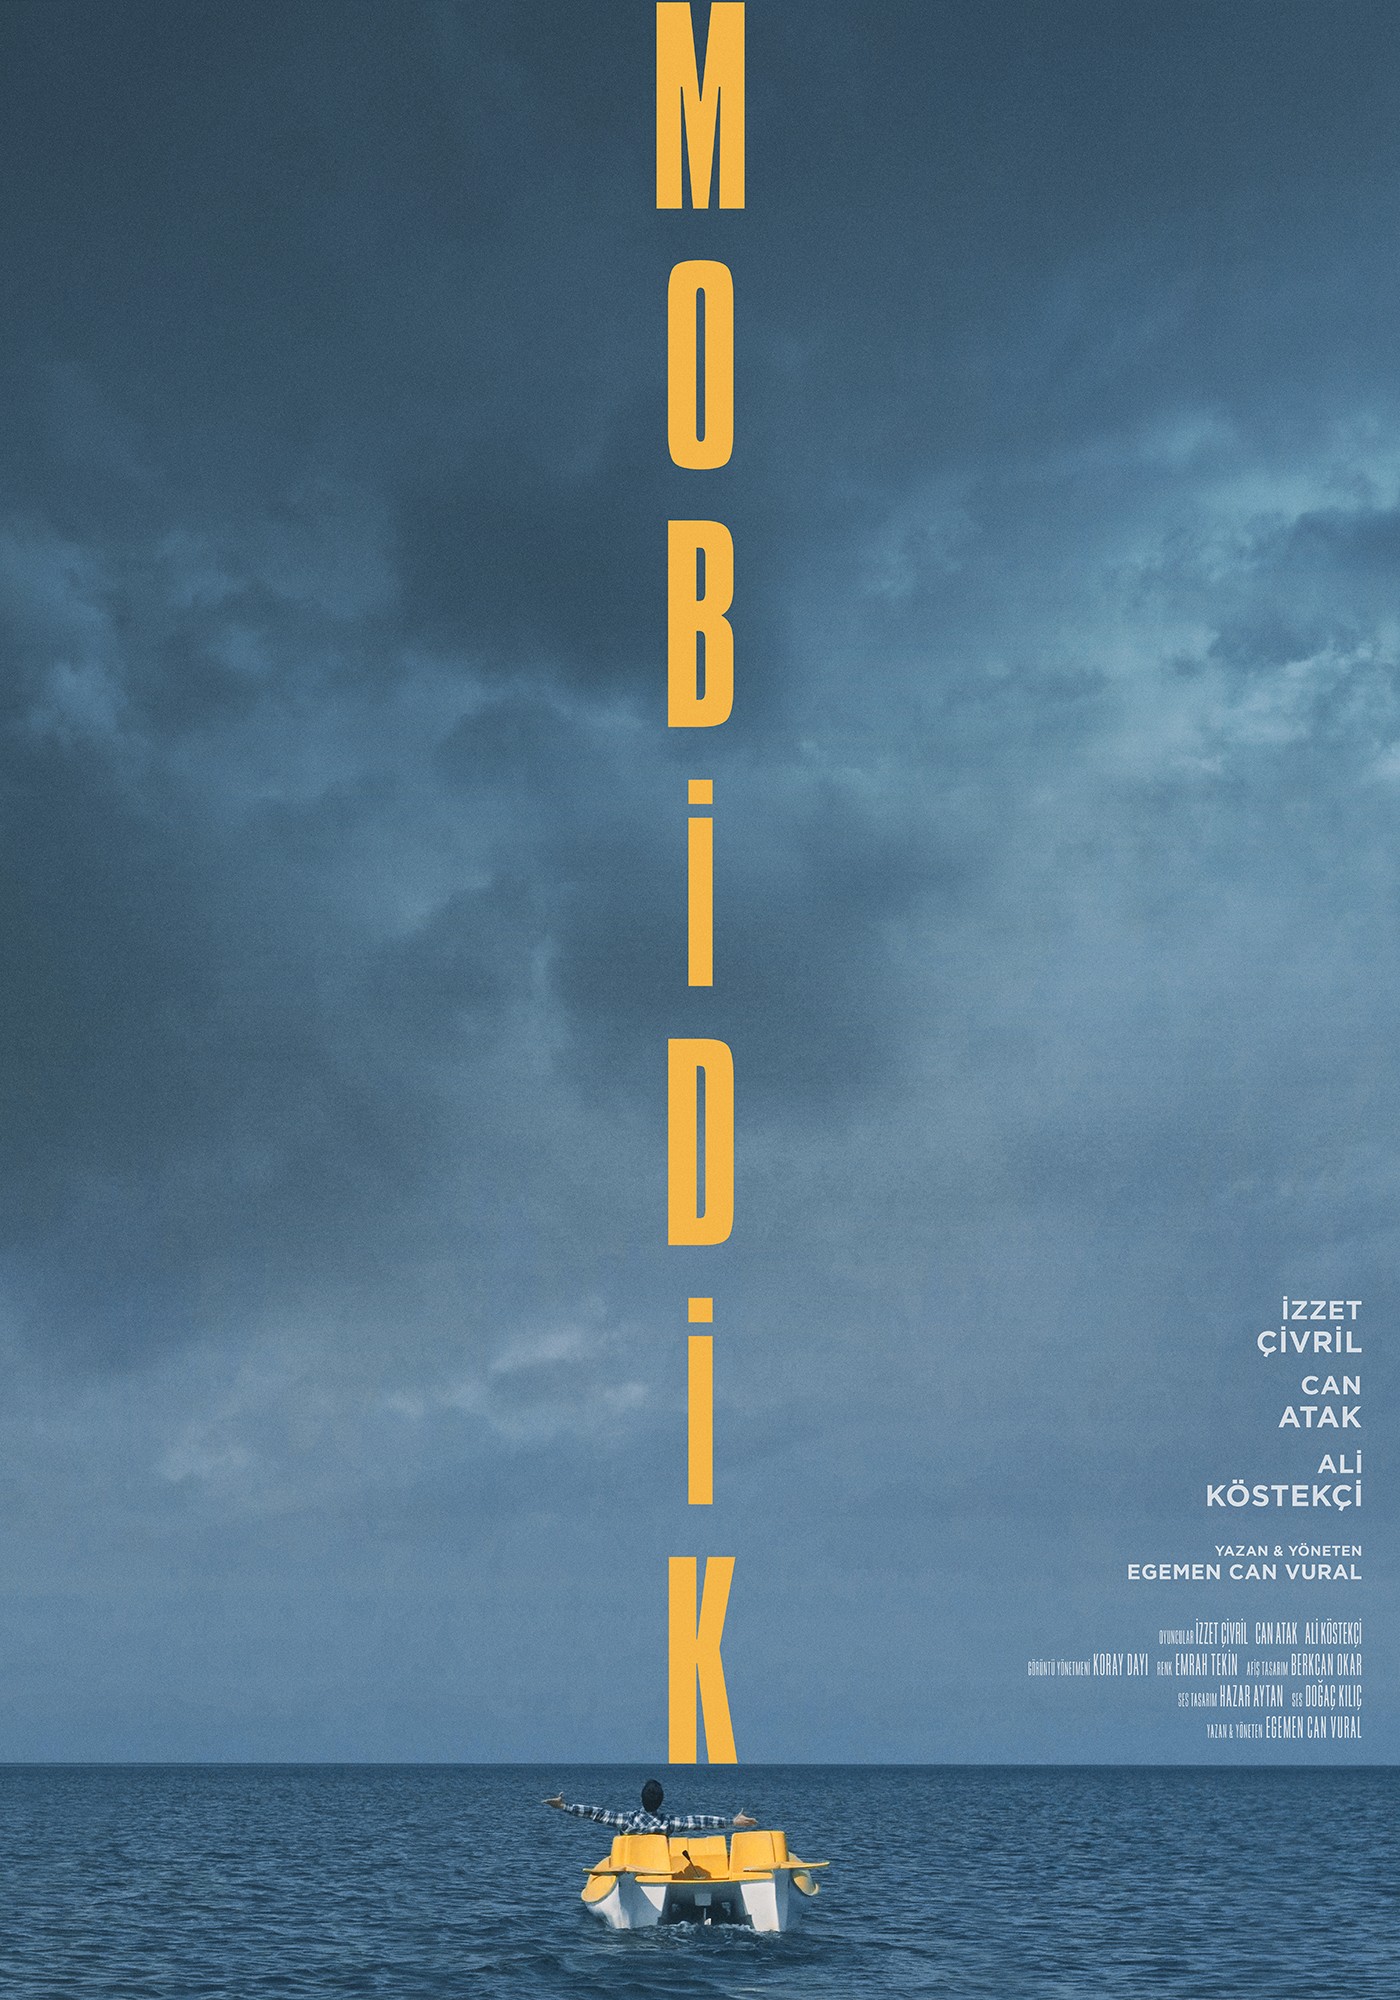 Mega Sized Movie Poster Image for Mobidik